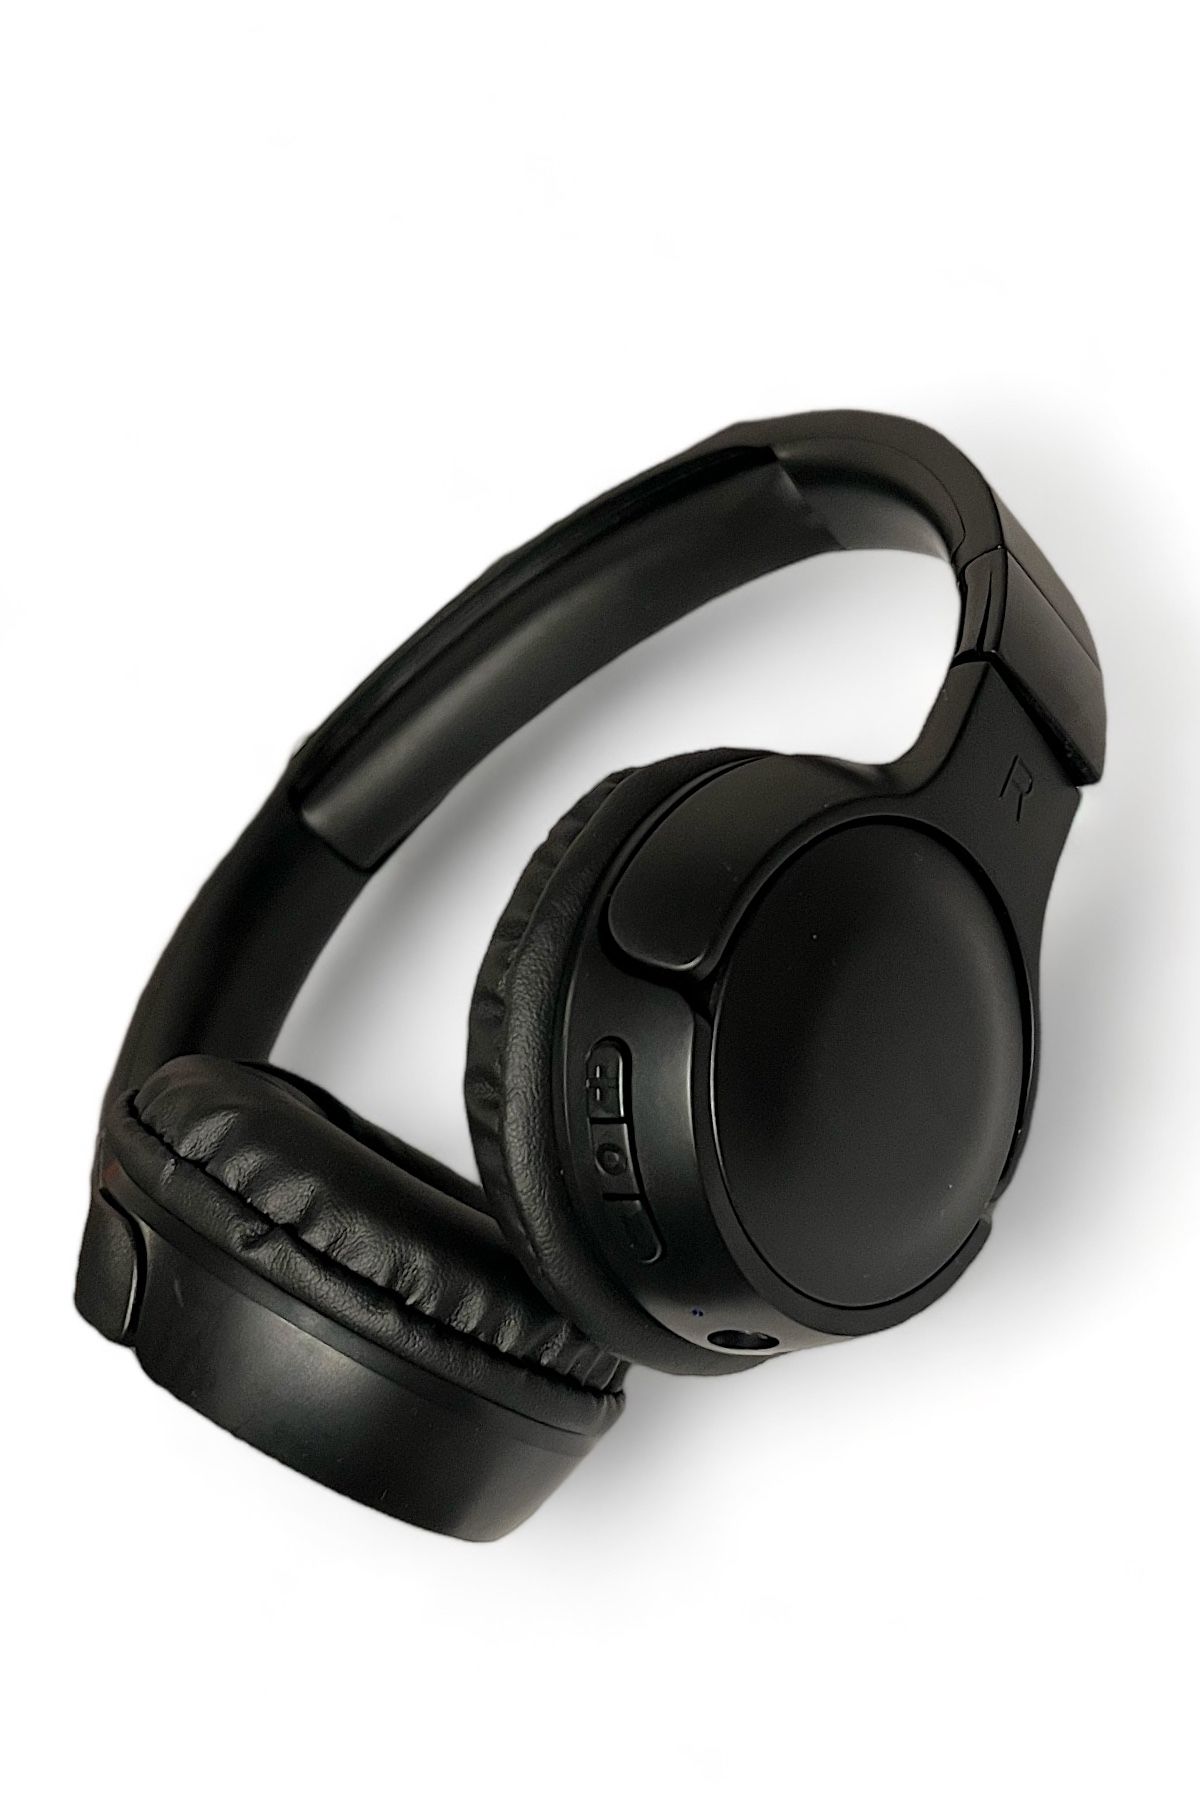 MATEO Bluetooth Kablosuz Kulaklık Kulak Üstü Siyah ios Android Uyumlu Mikrofon Ses BT